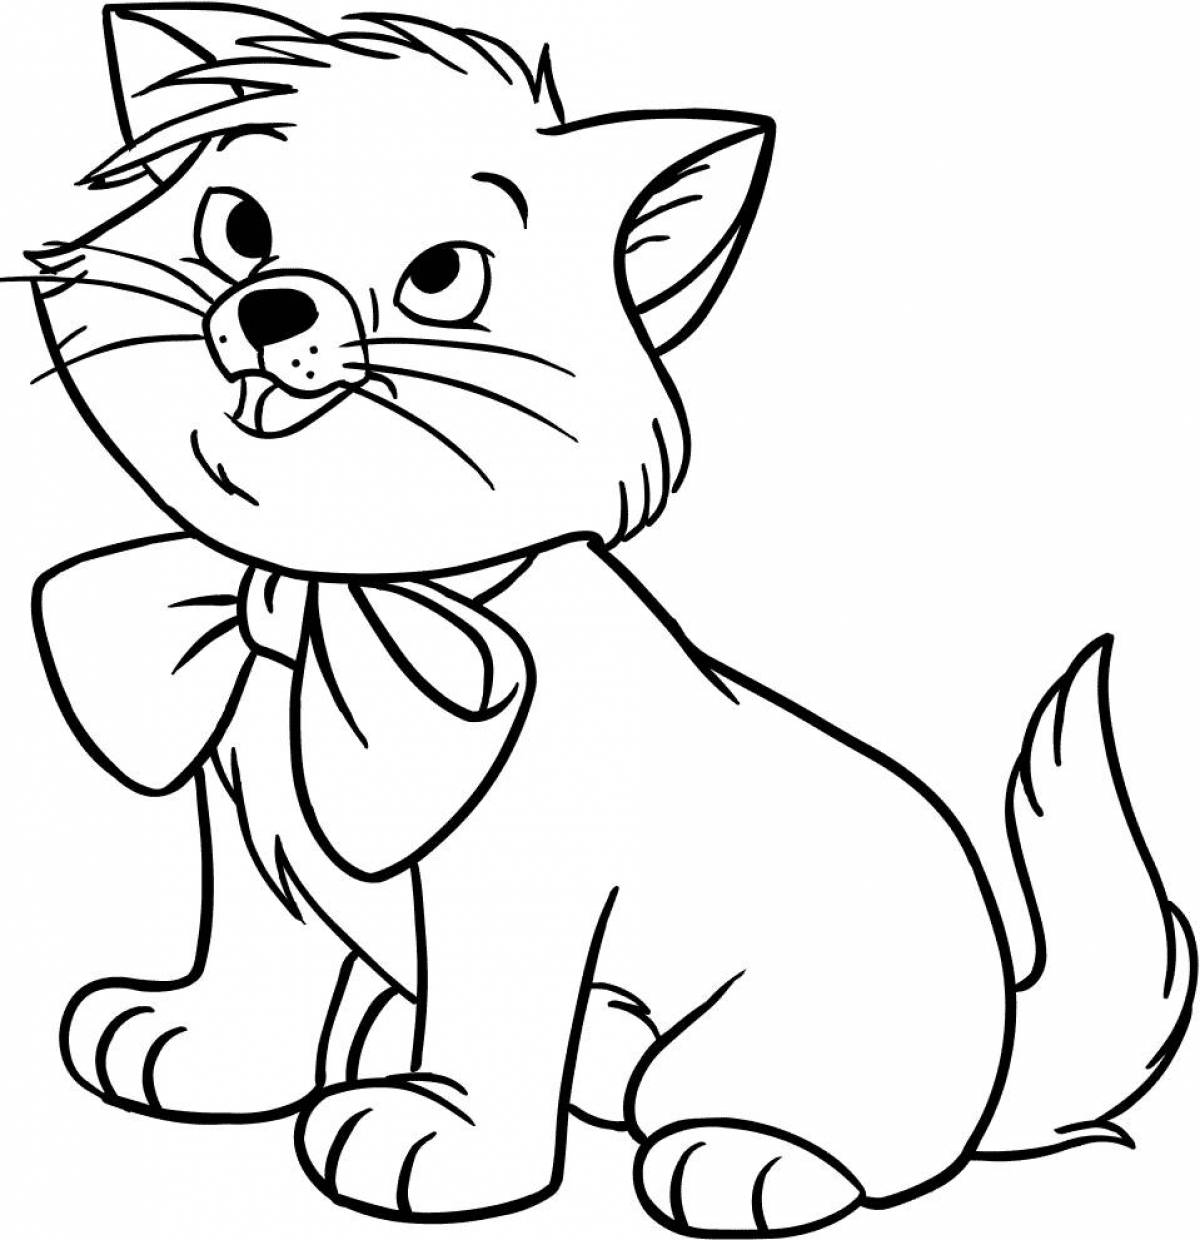 Naughty cat cartoon coloring book